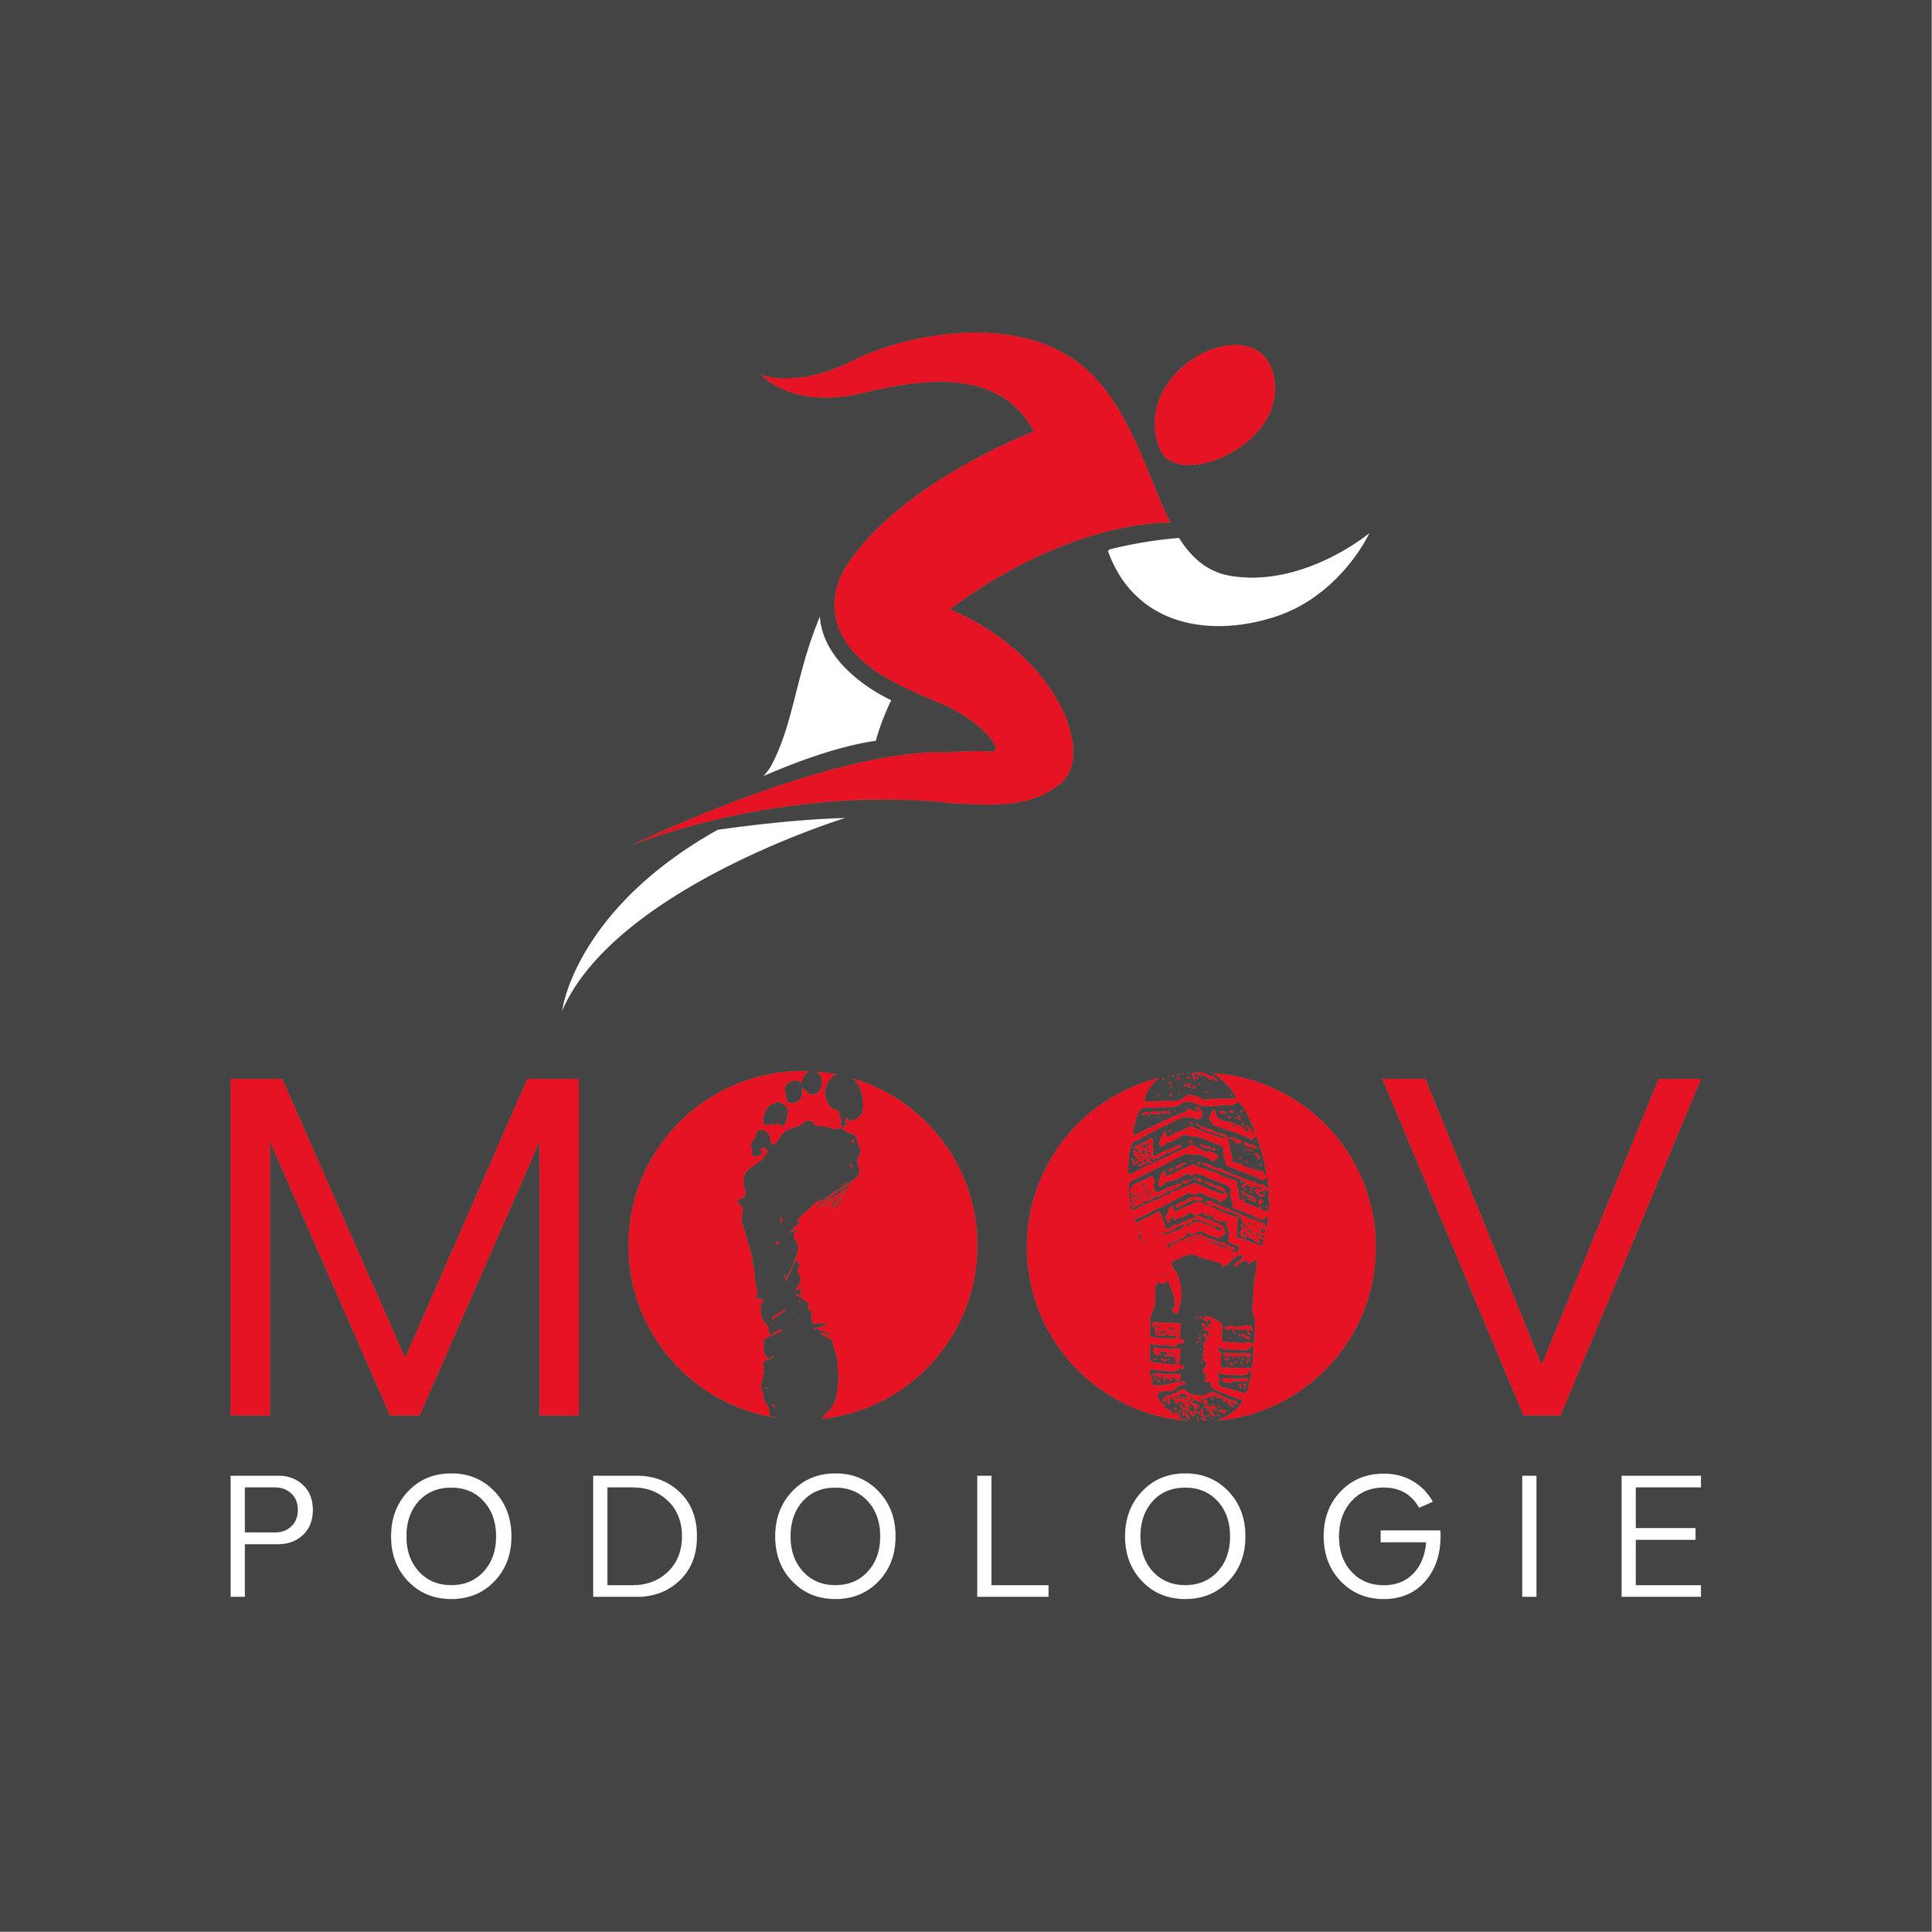 Vlieger typist mythologie Het verschil tussen podologische zolen en steunzolen — MOOV